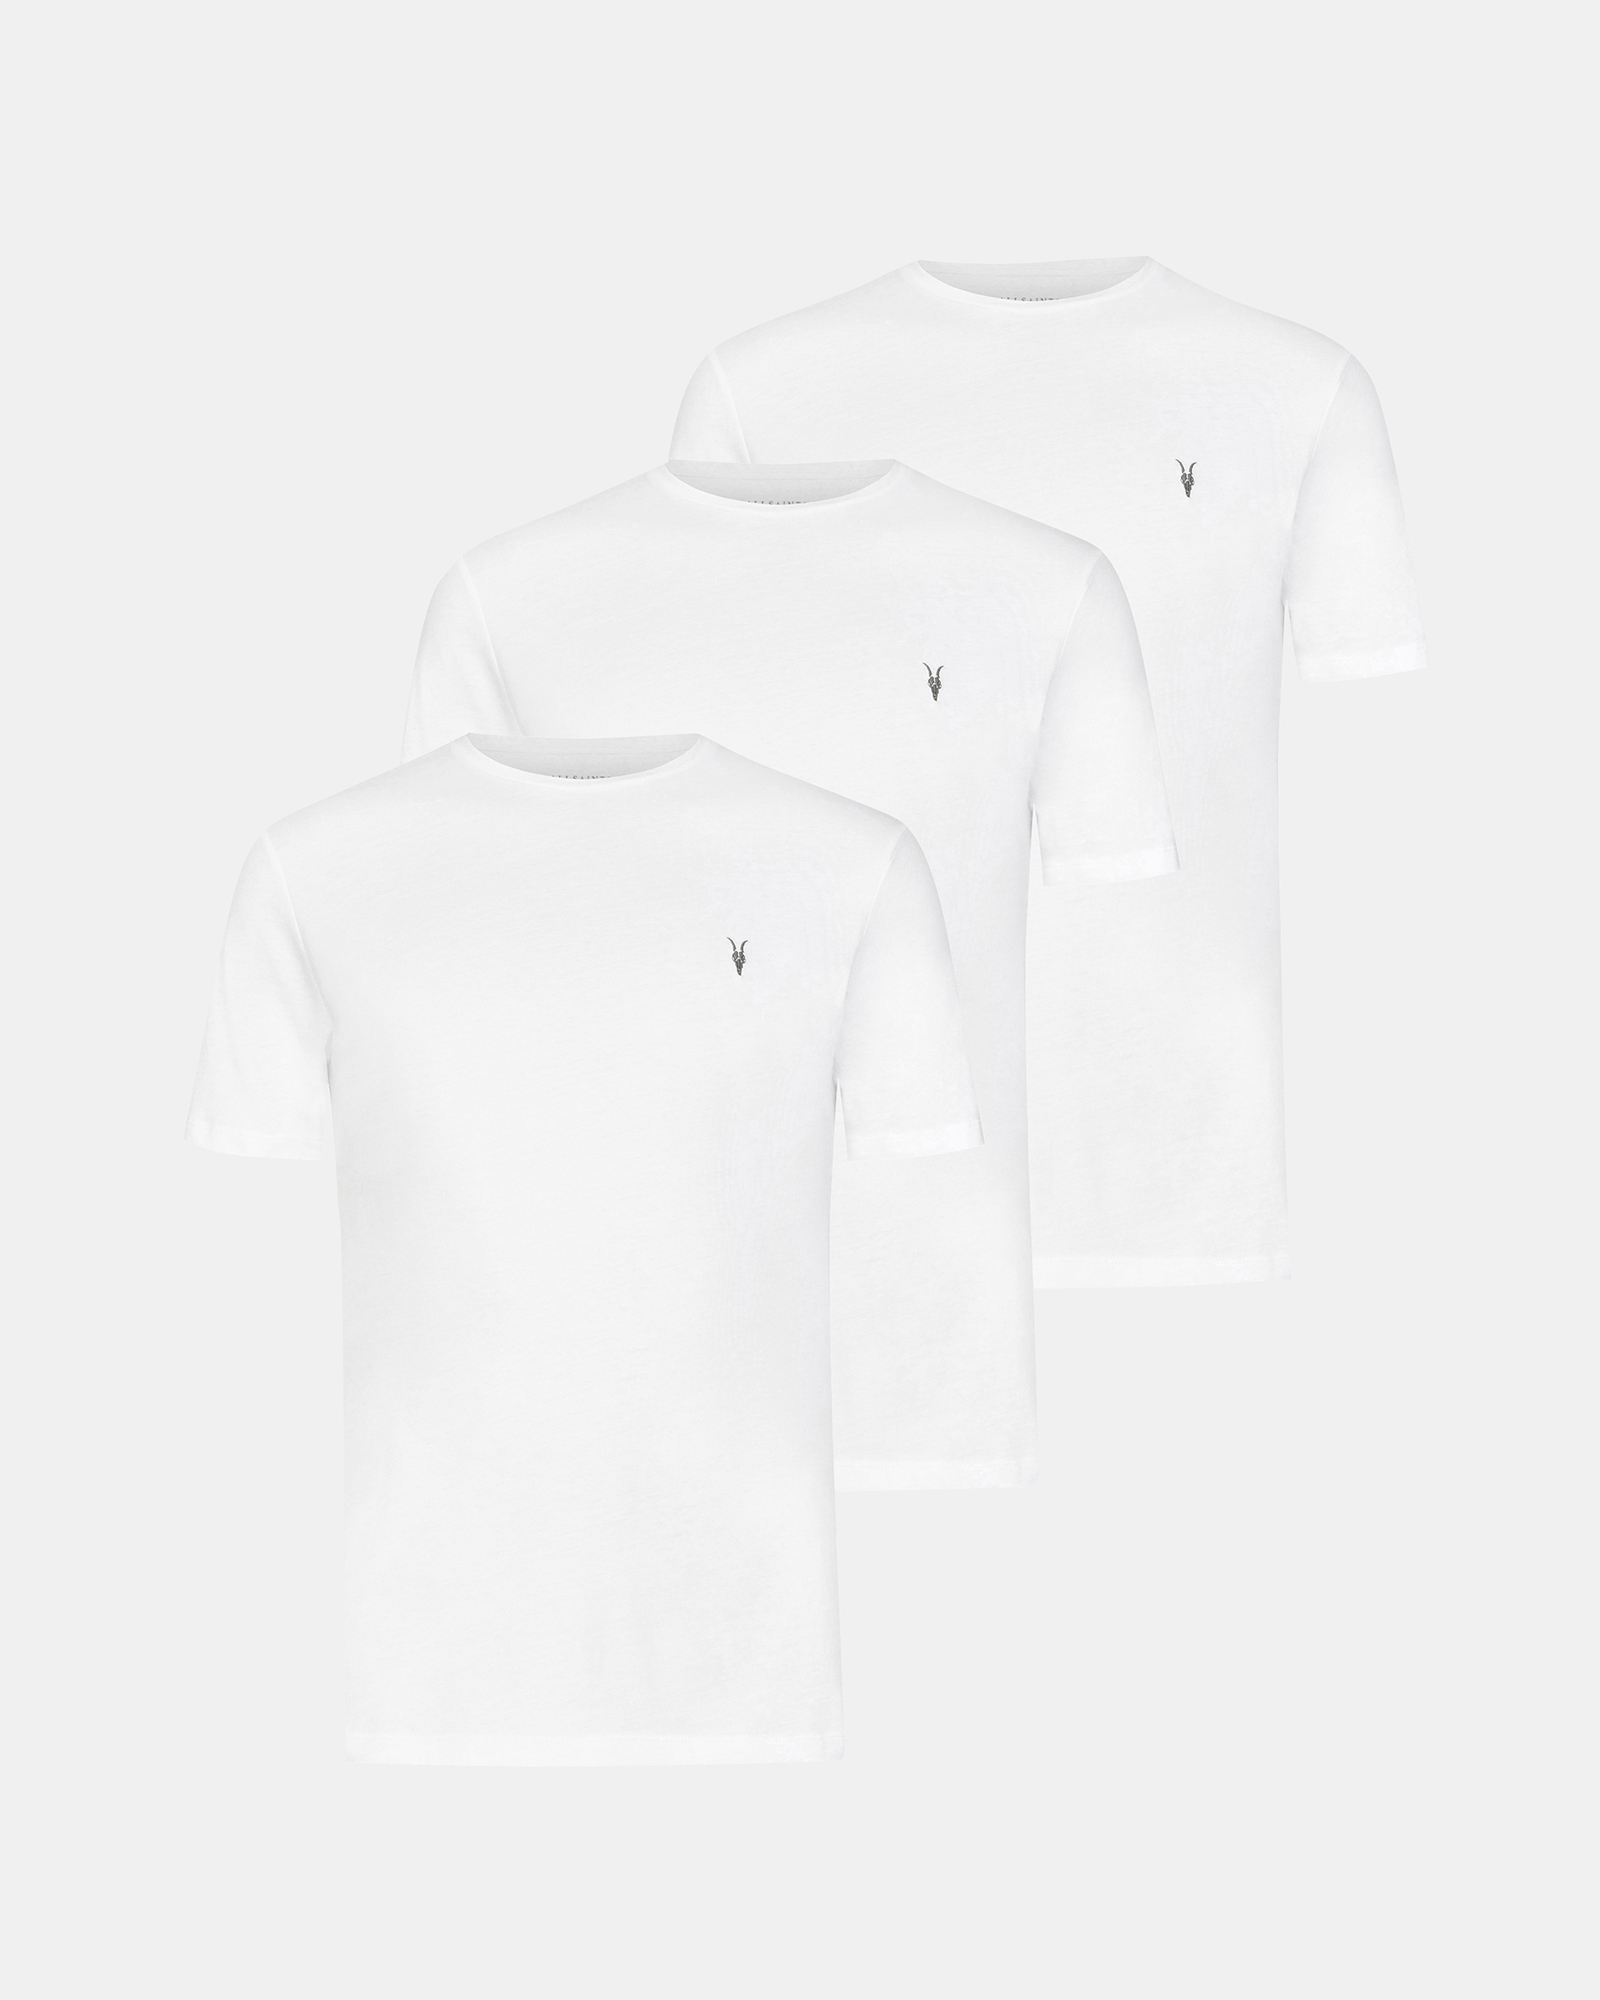 AllSaints Brace Brushed Cotton 3 Pack T-Shirts,, White